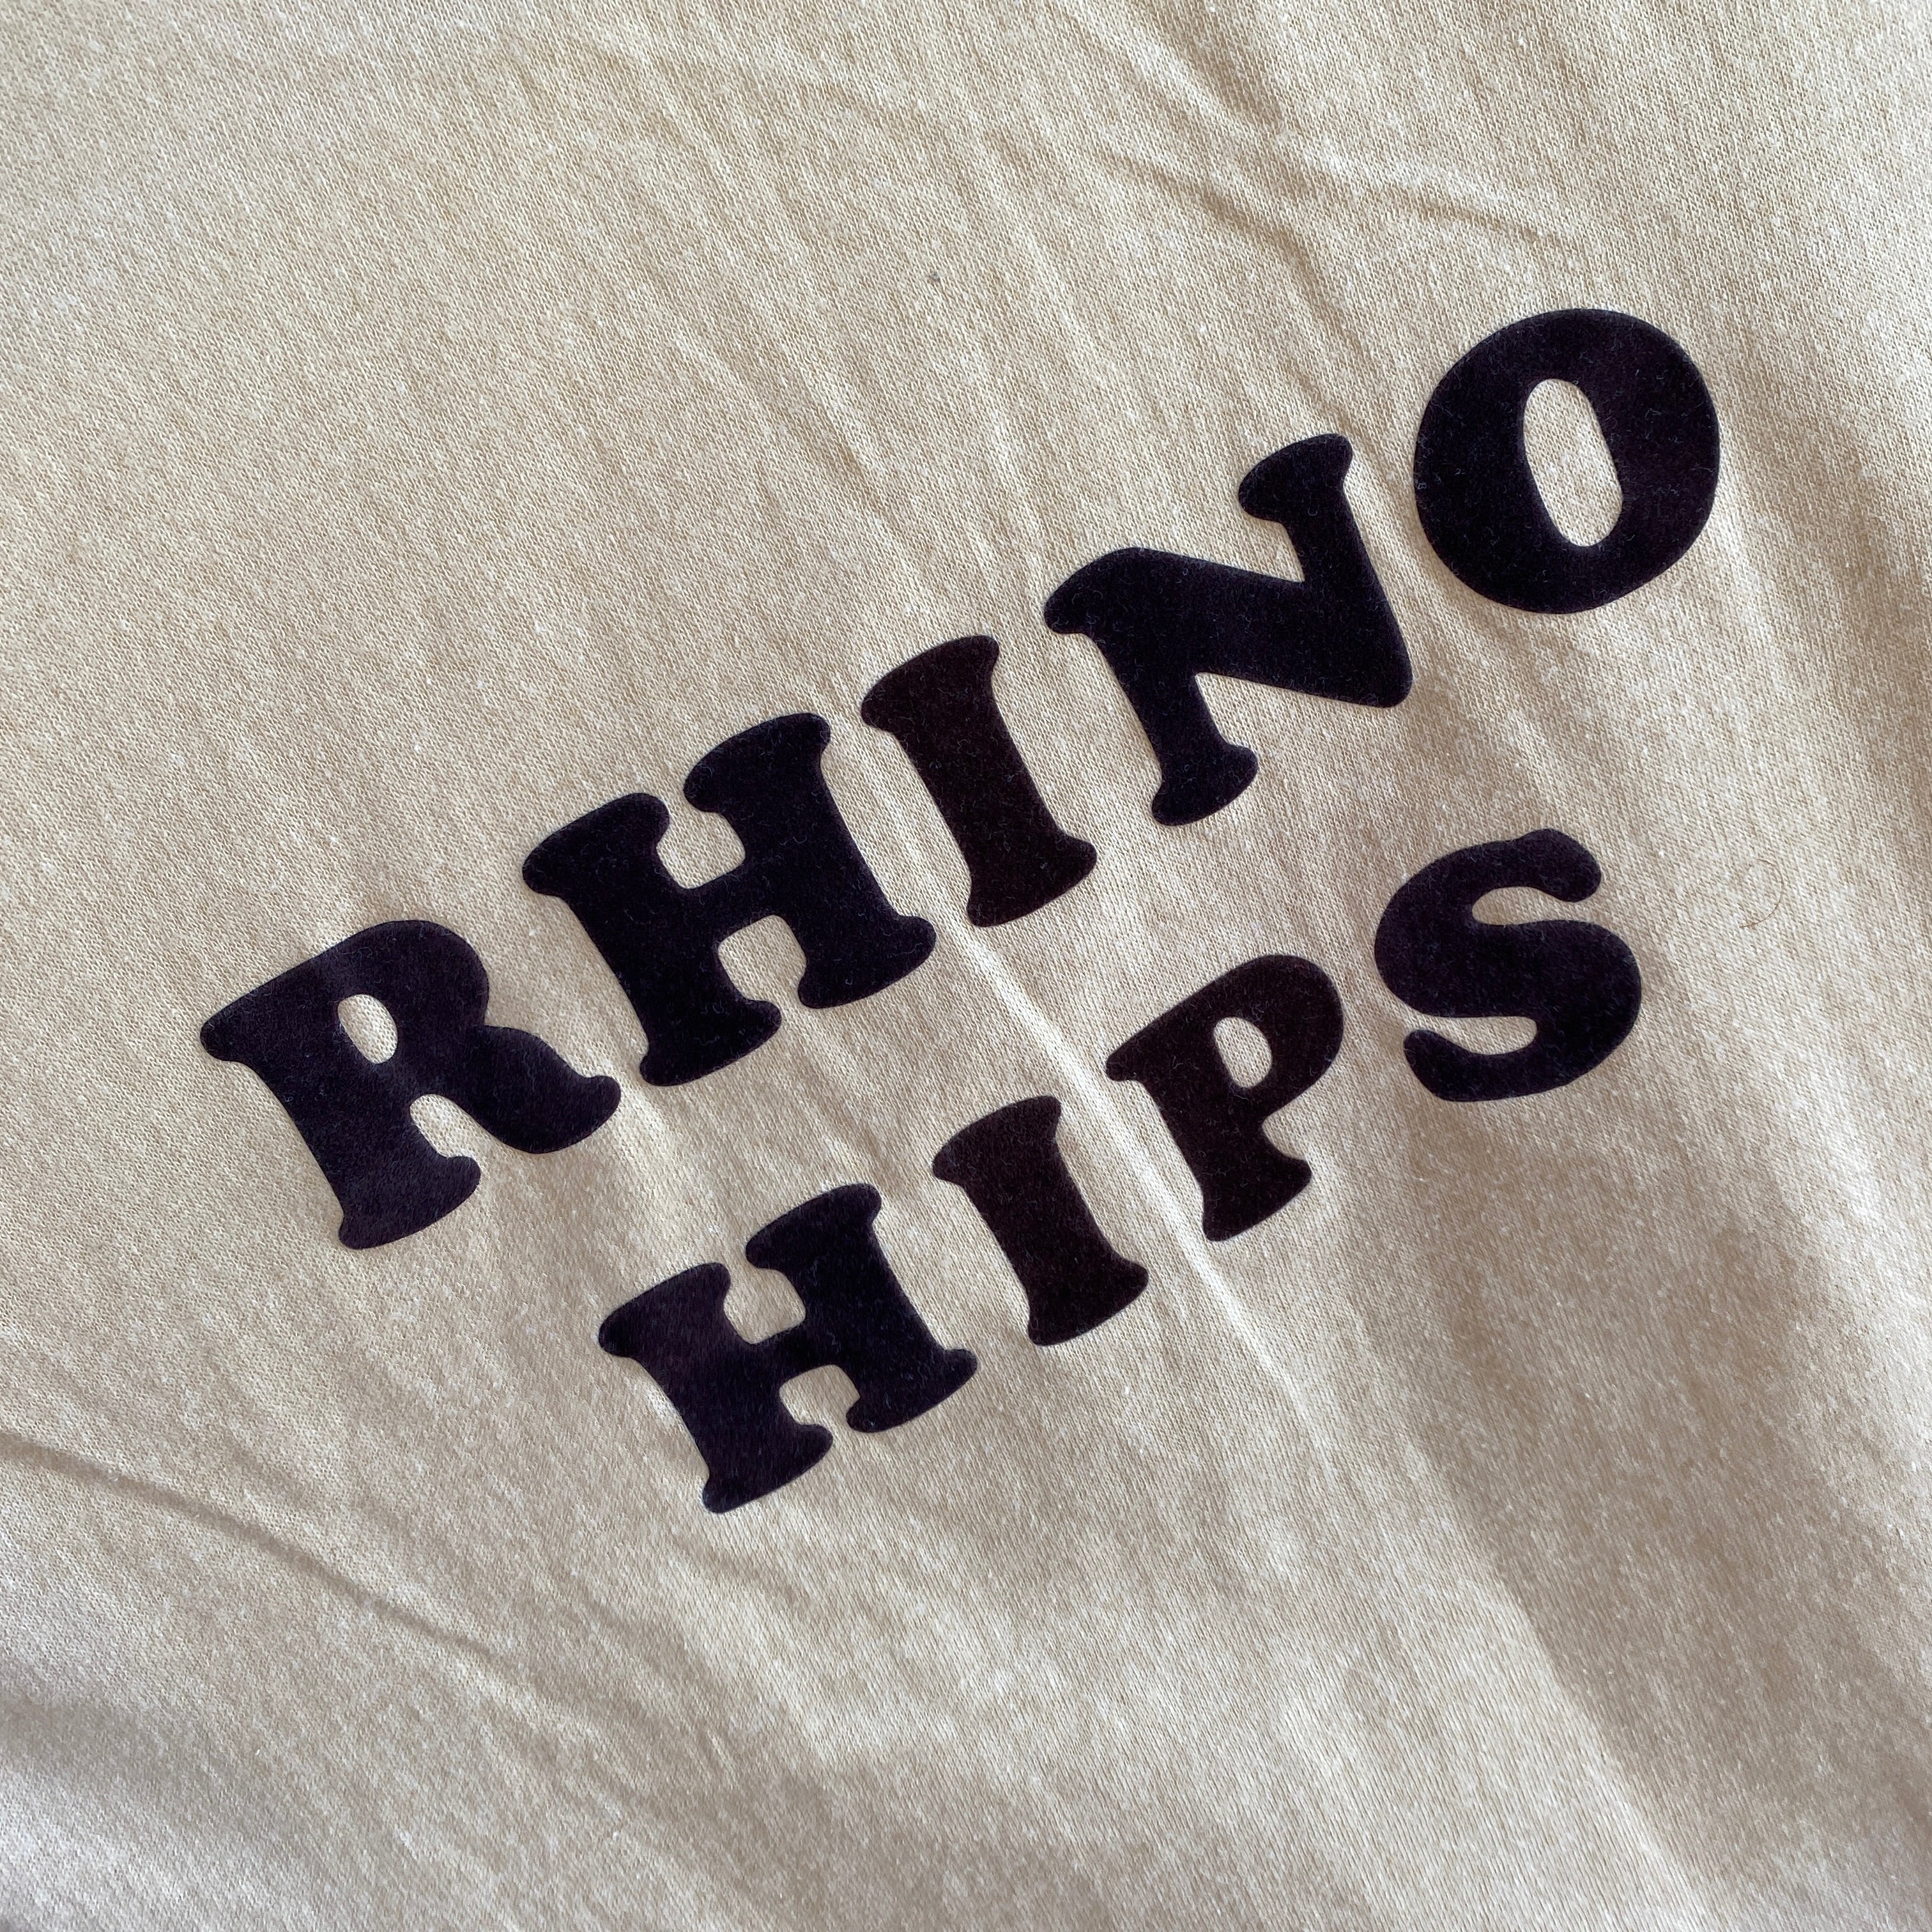 1970s Rhino Hips I LOVE YOU - DIY 